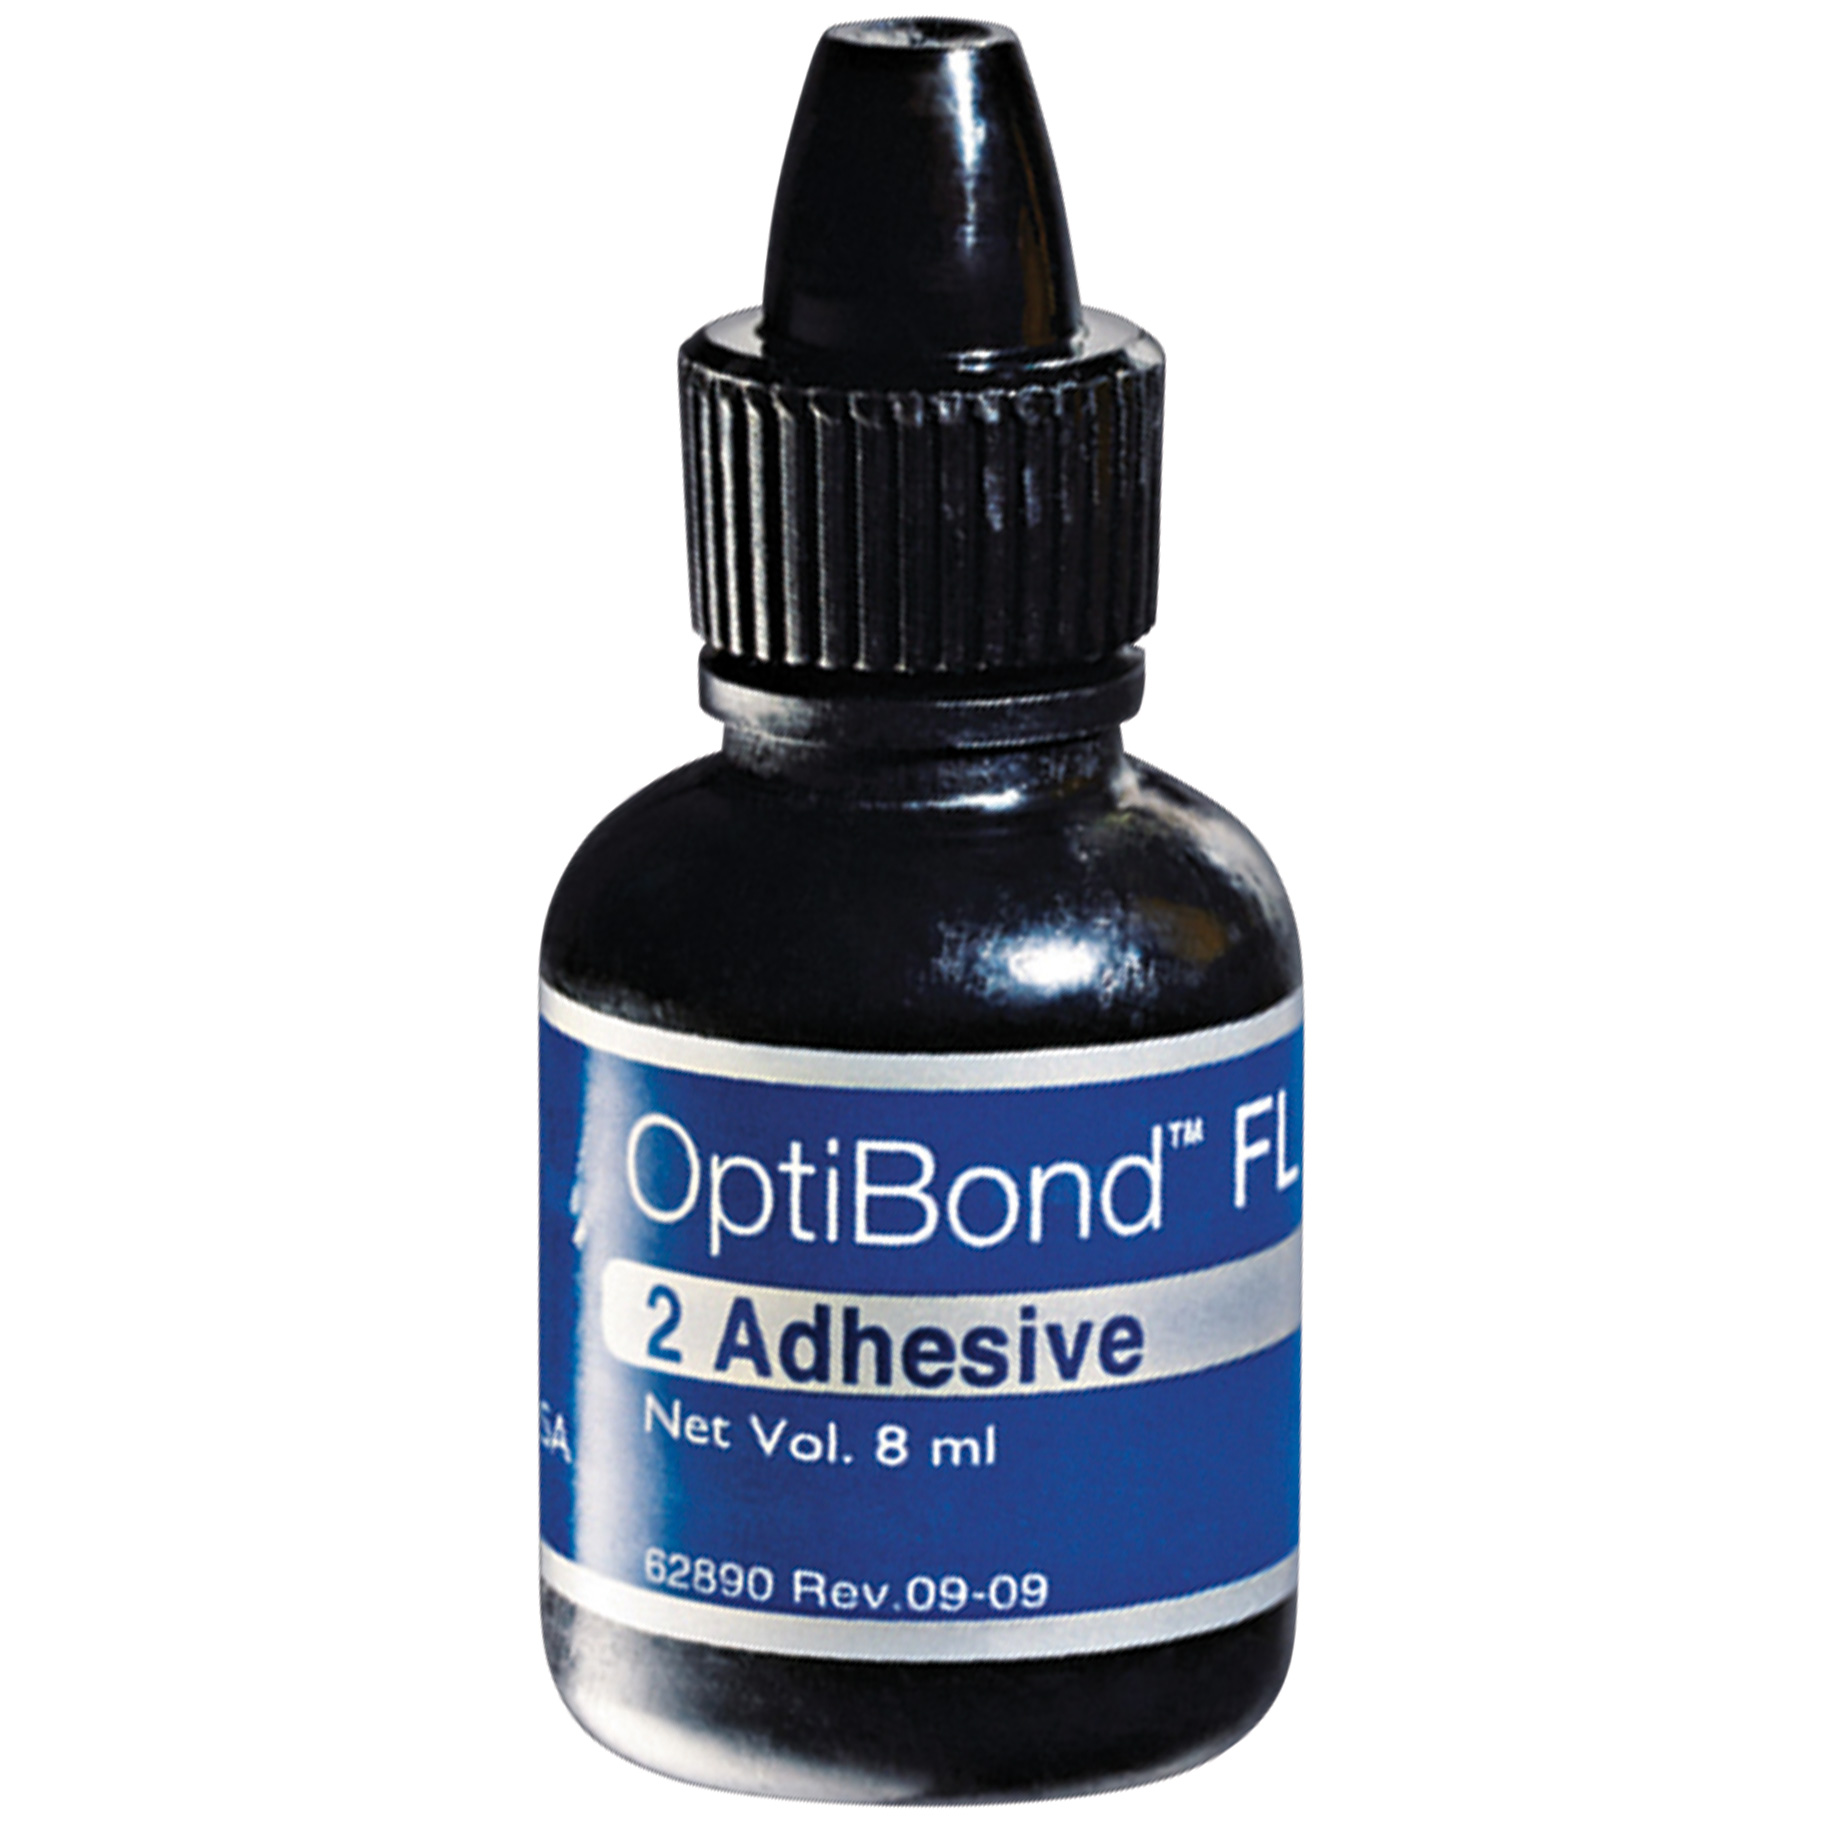 OptiBond FL Adhesive 